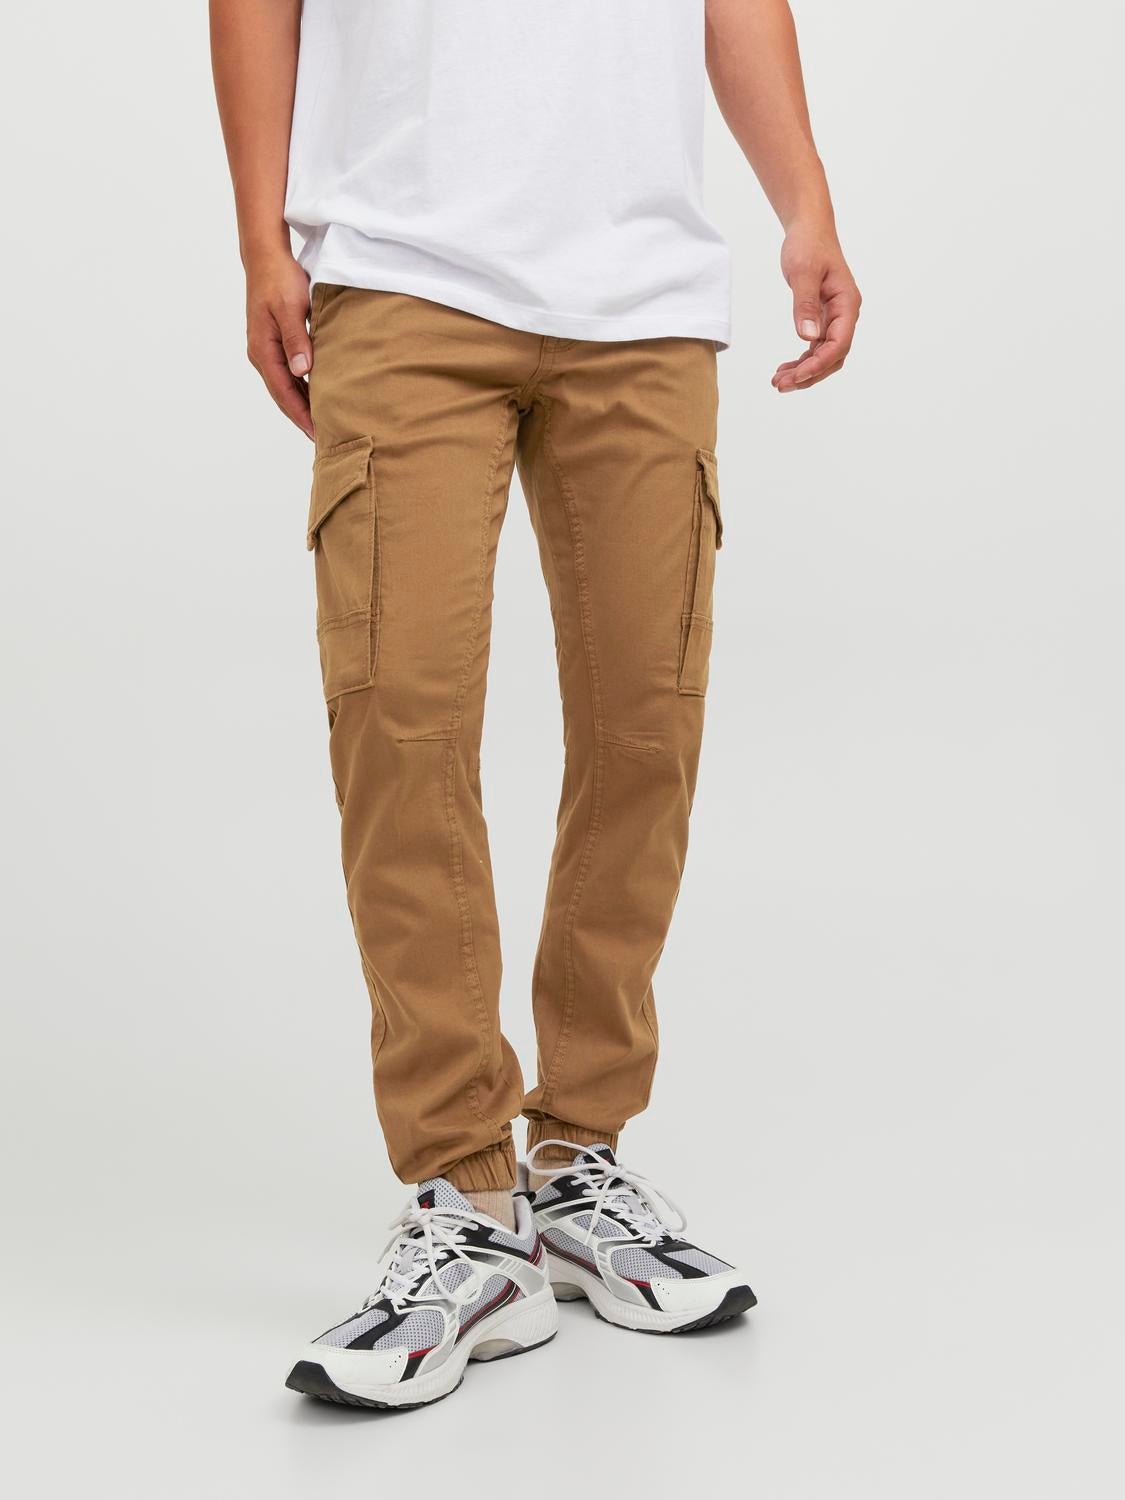 New Look Khaki Cotton Cuffed Cargo Trousers | littlewoods.com